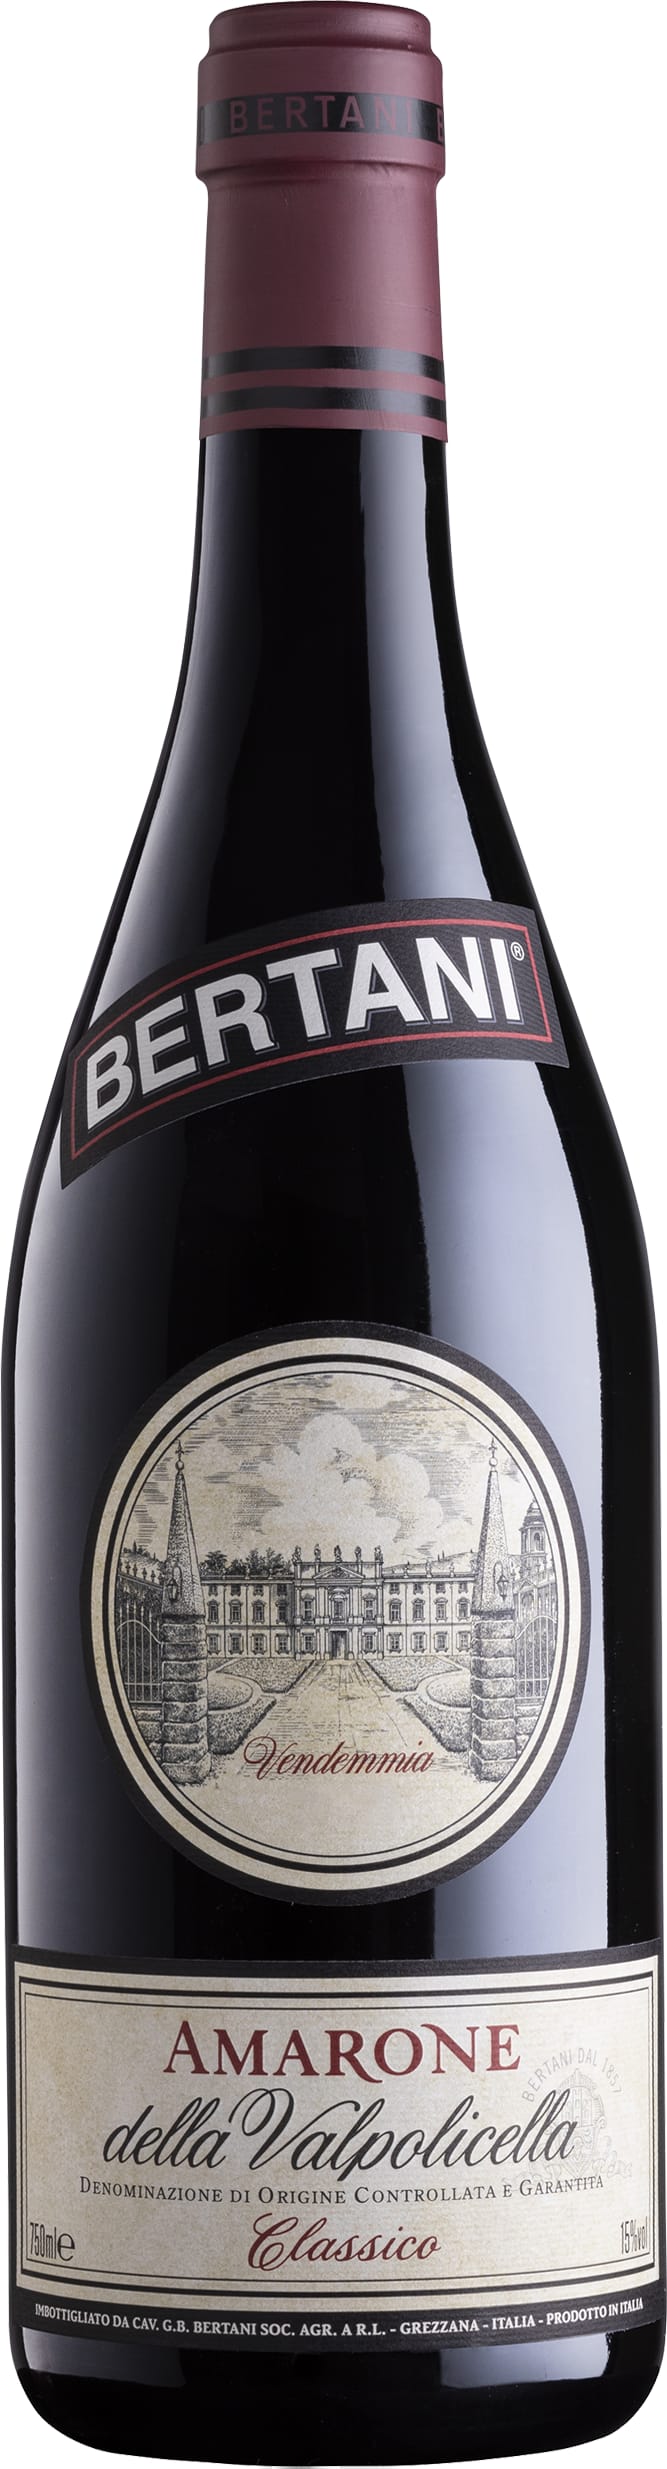 Amarone Cl Doc 64 Bertani 75cl - Buy Bertani Wines from GREAT WINES DIRECT wine shop